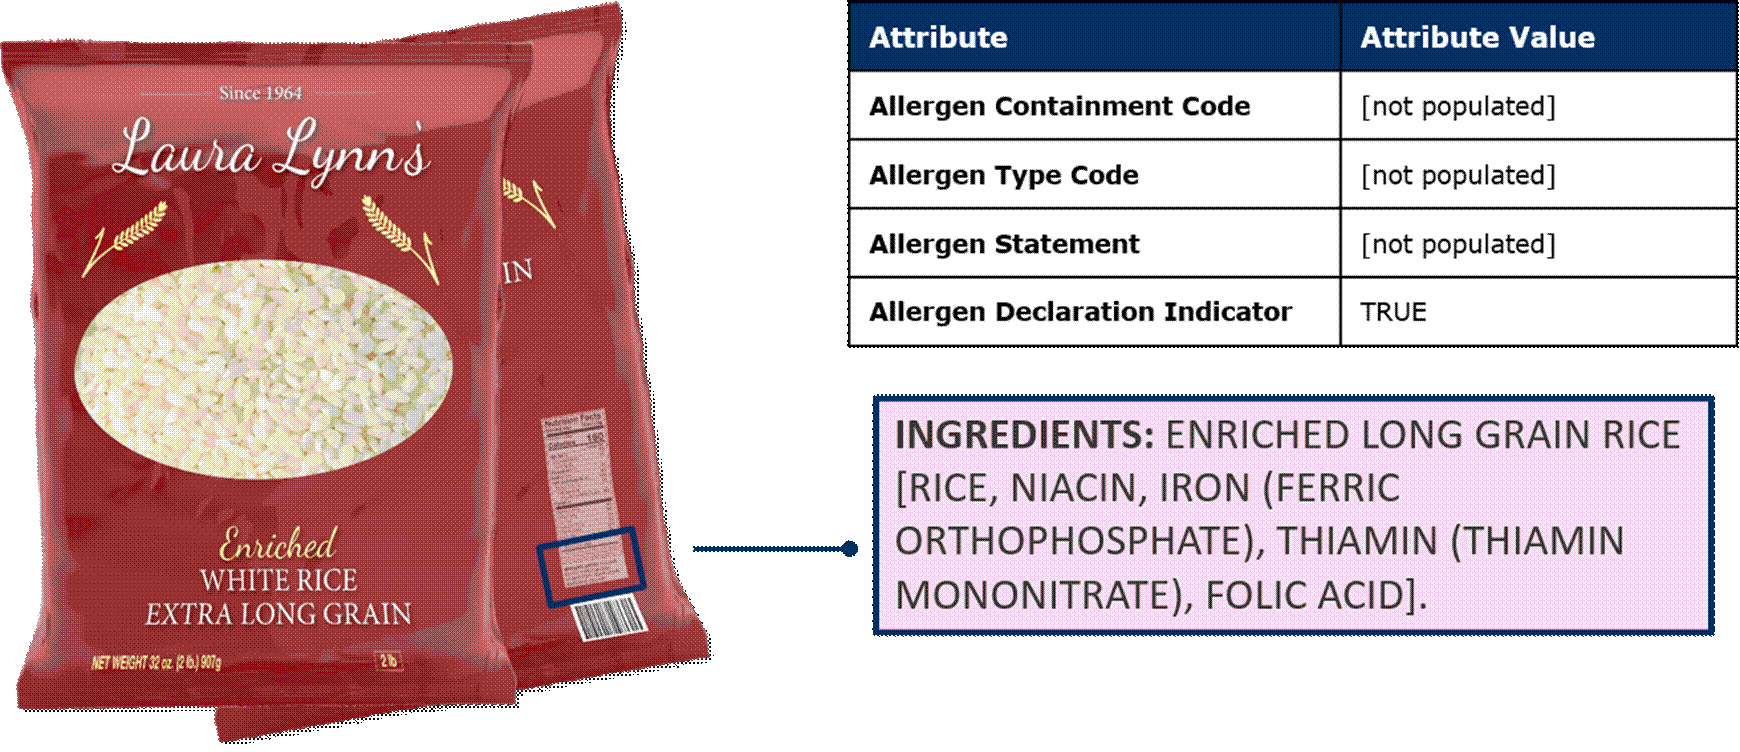 10.3 Allergen Attributes Example – Rice (No Allergens Present) - Image 0